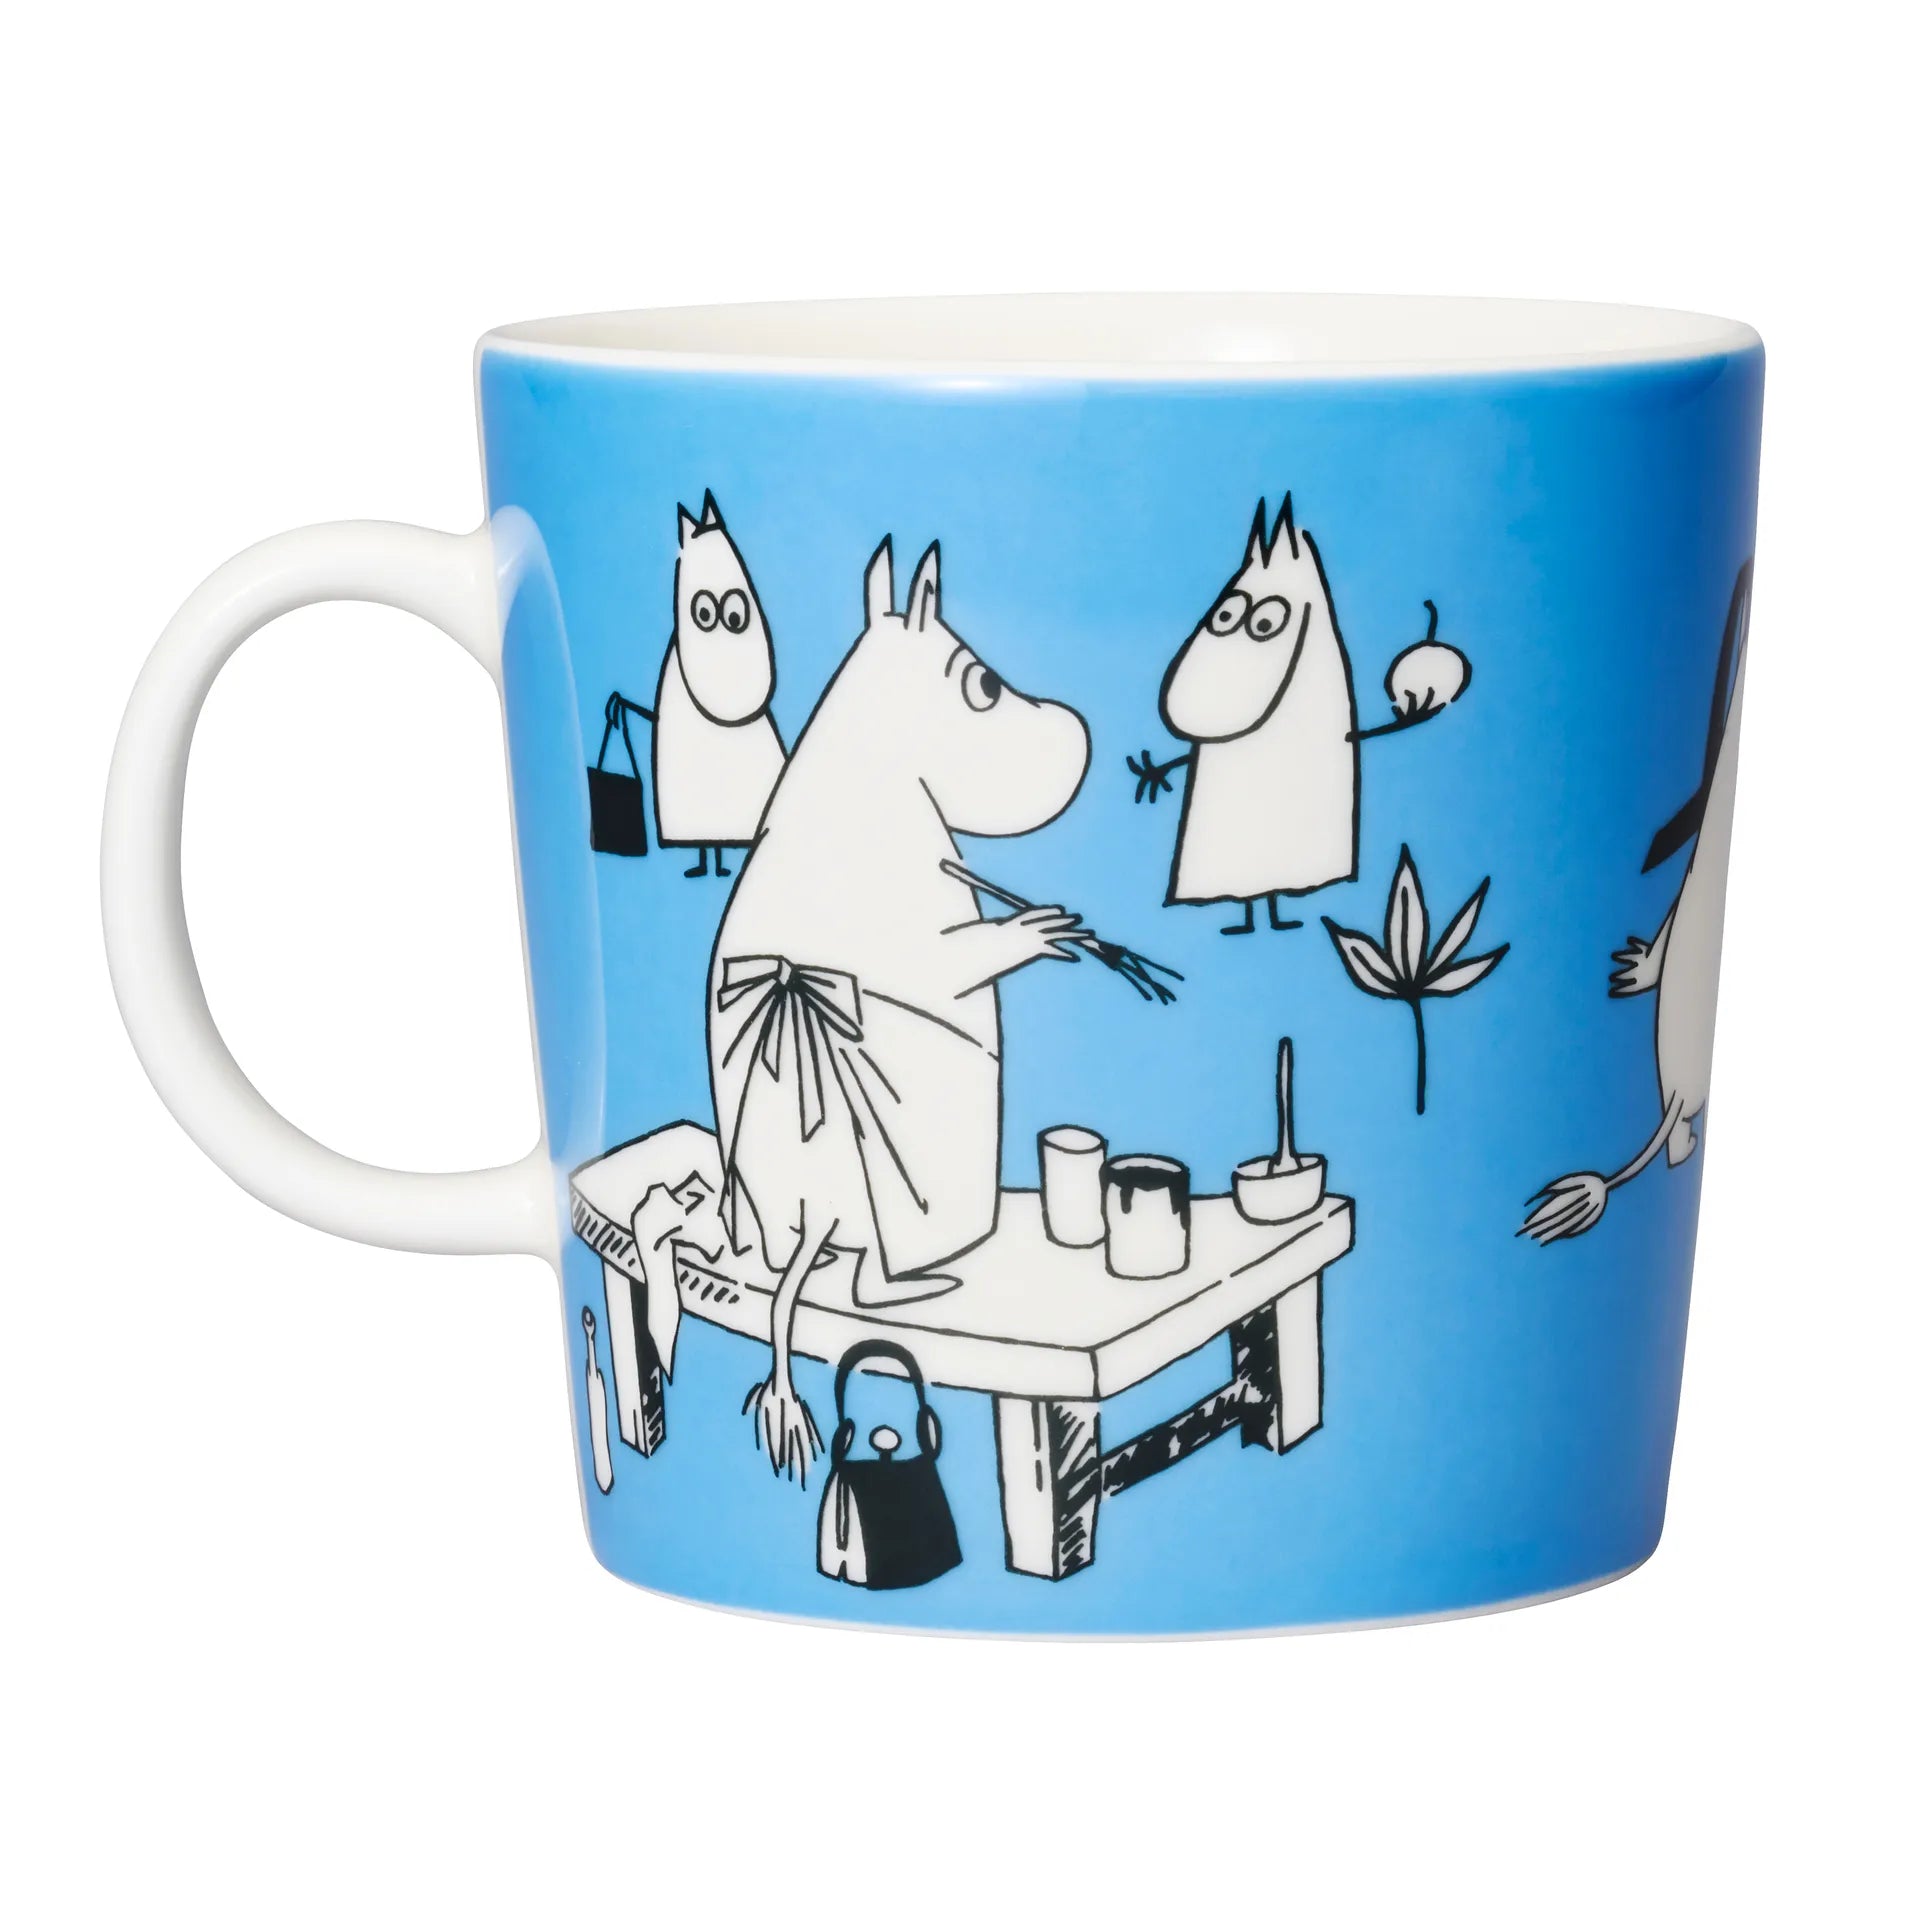 Moomin mug special LARGE 400ml Blue